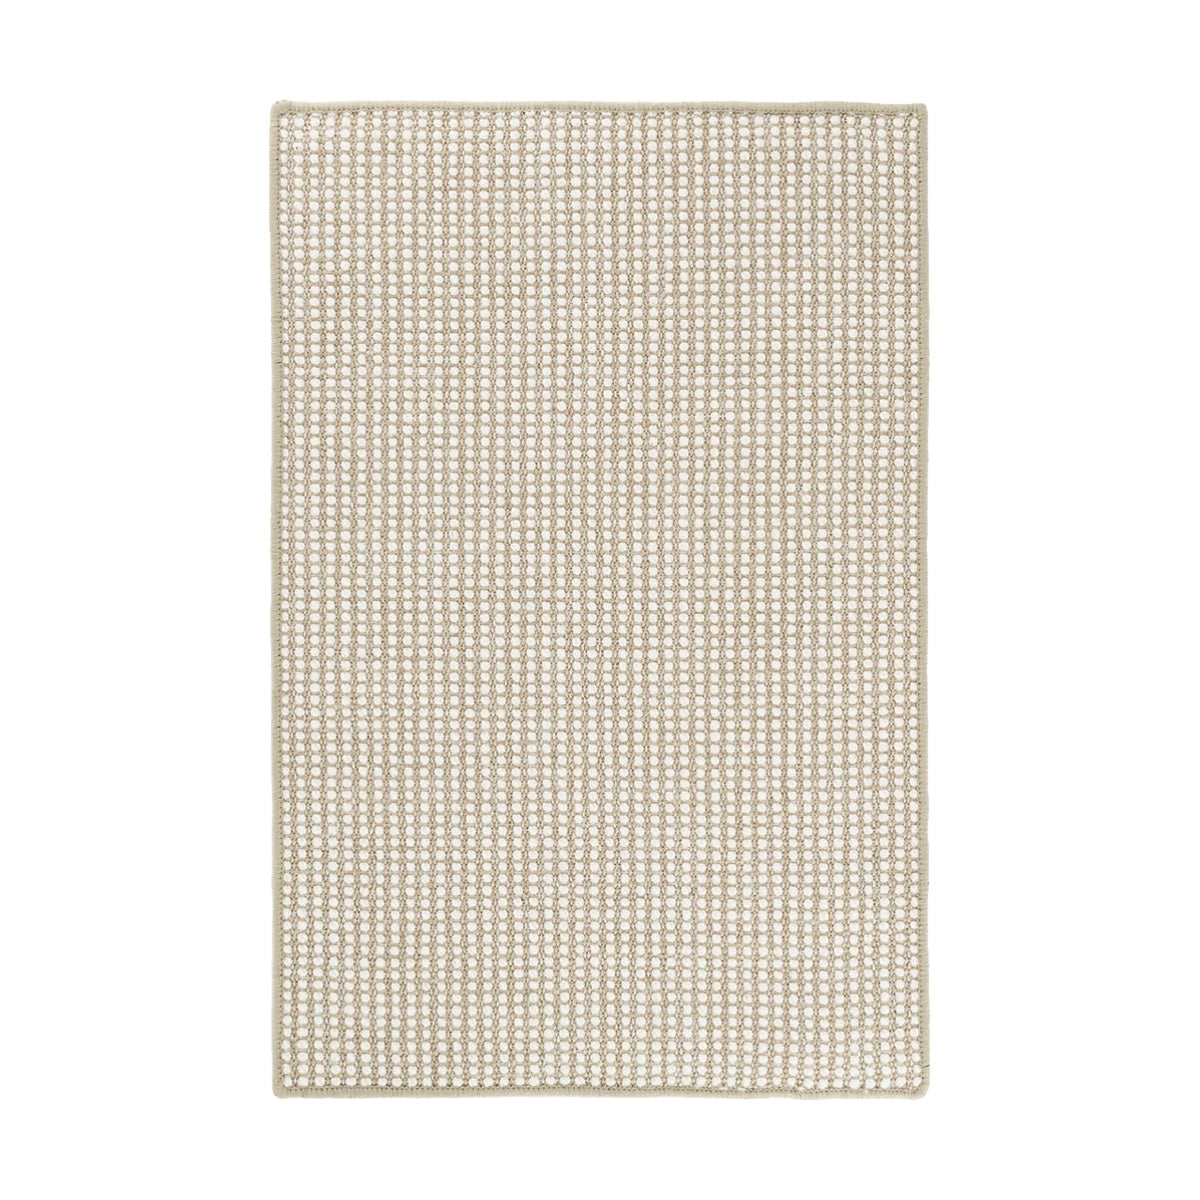 Pixel Wheat Woven Rug